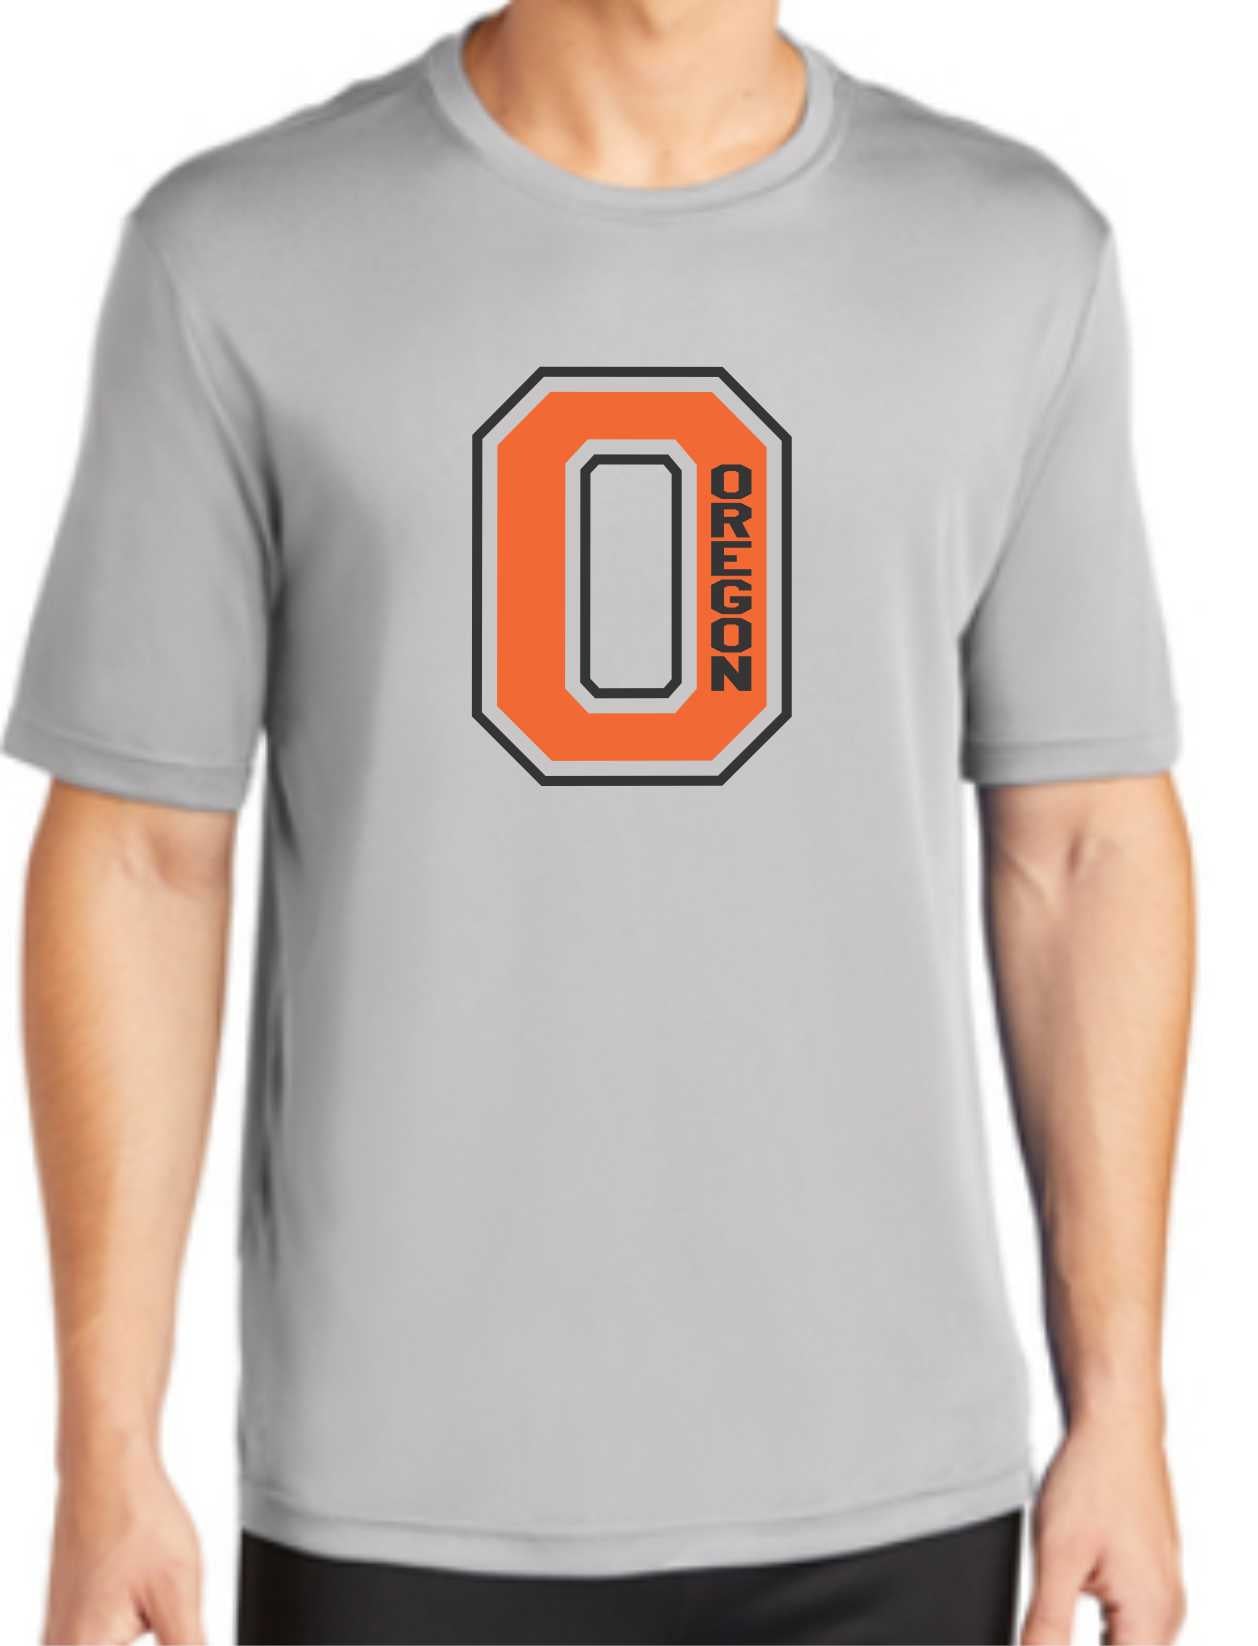 Oregon Panthers Sublimated T-shirt gray or orange v2, Youth/ Adult